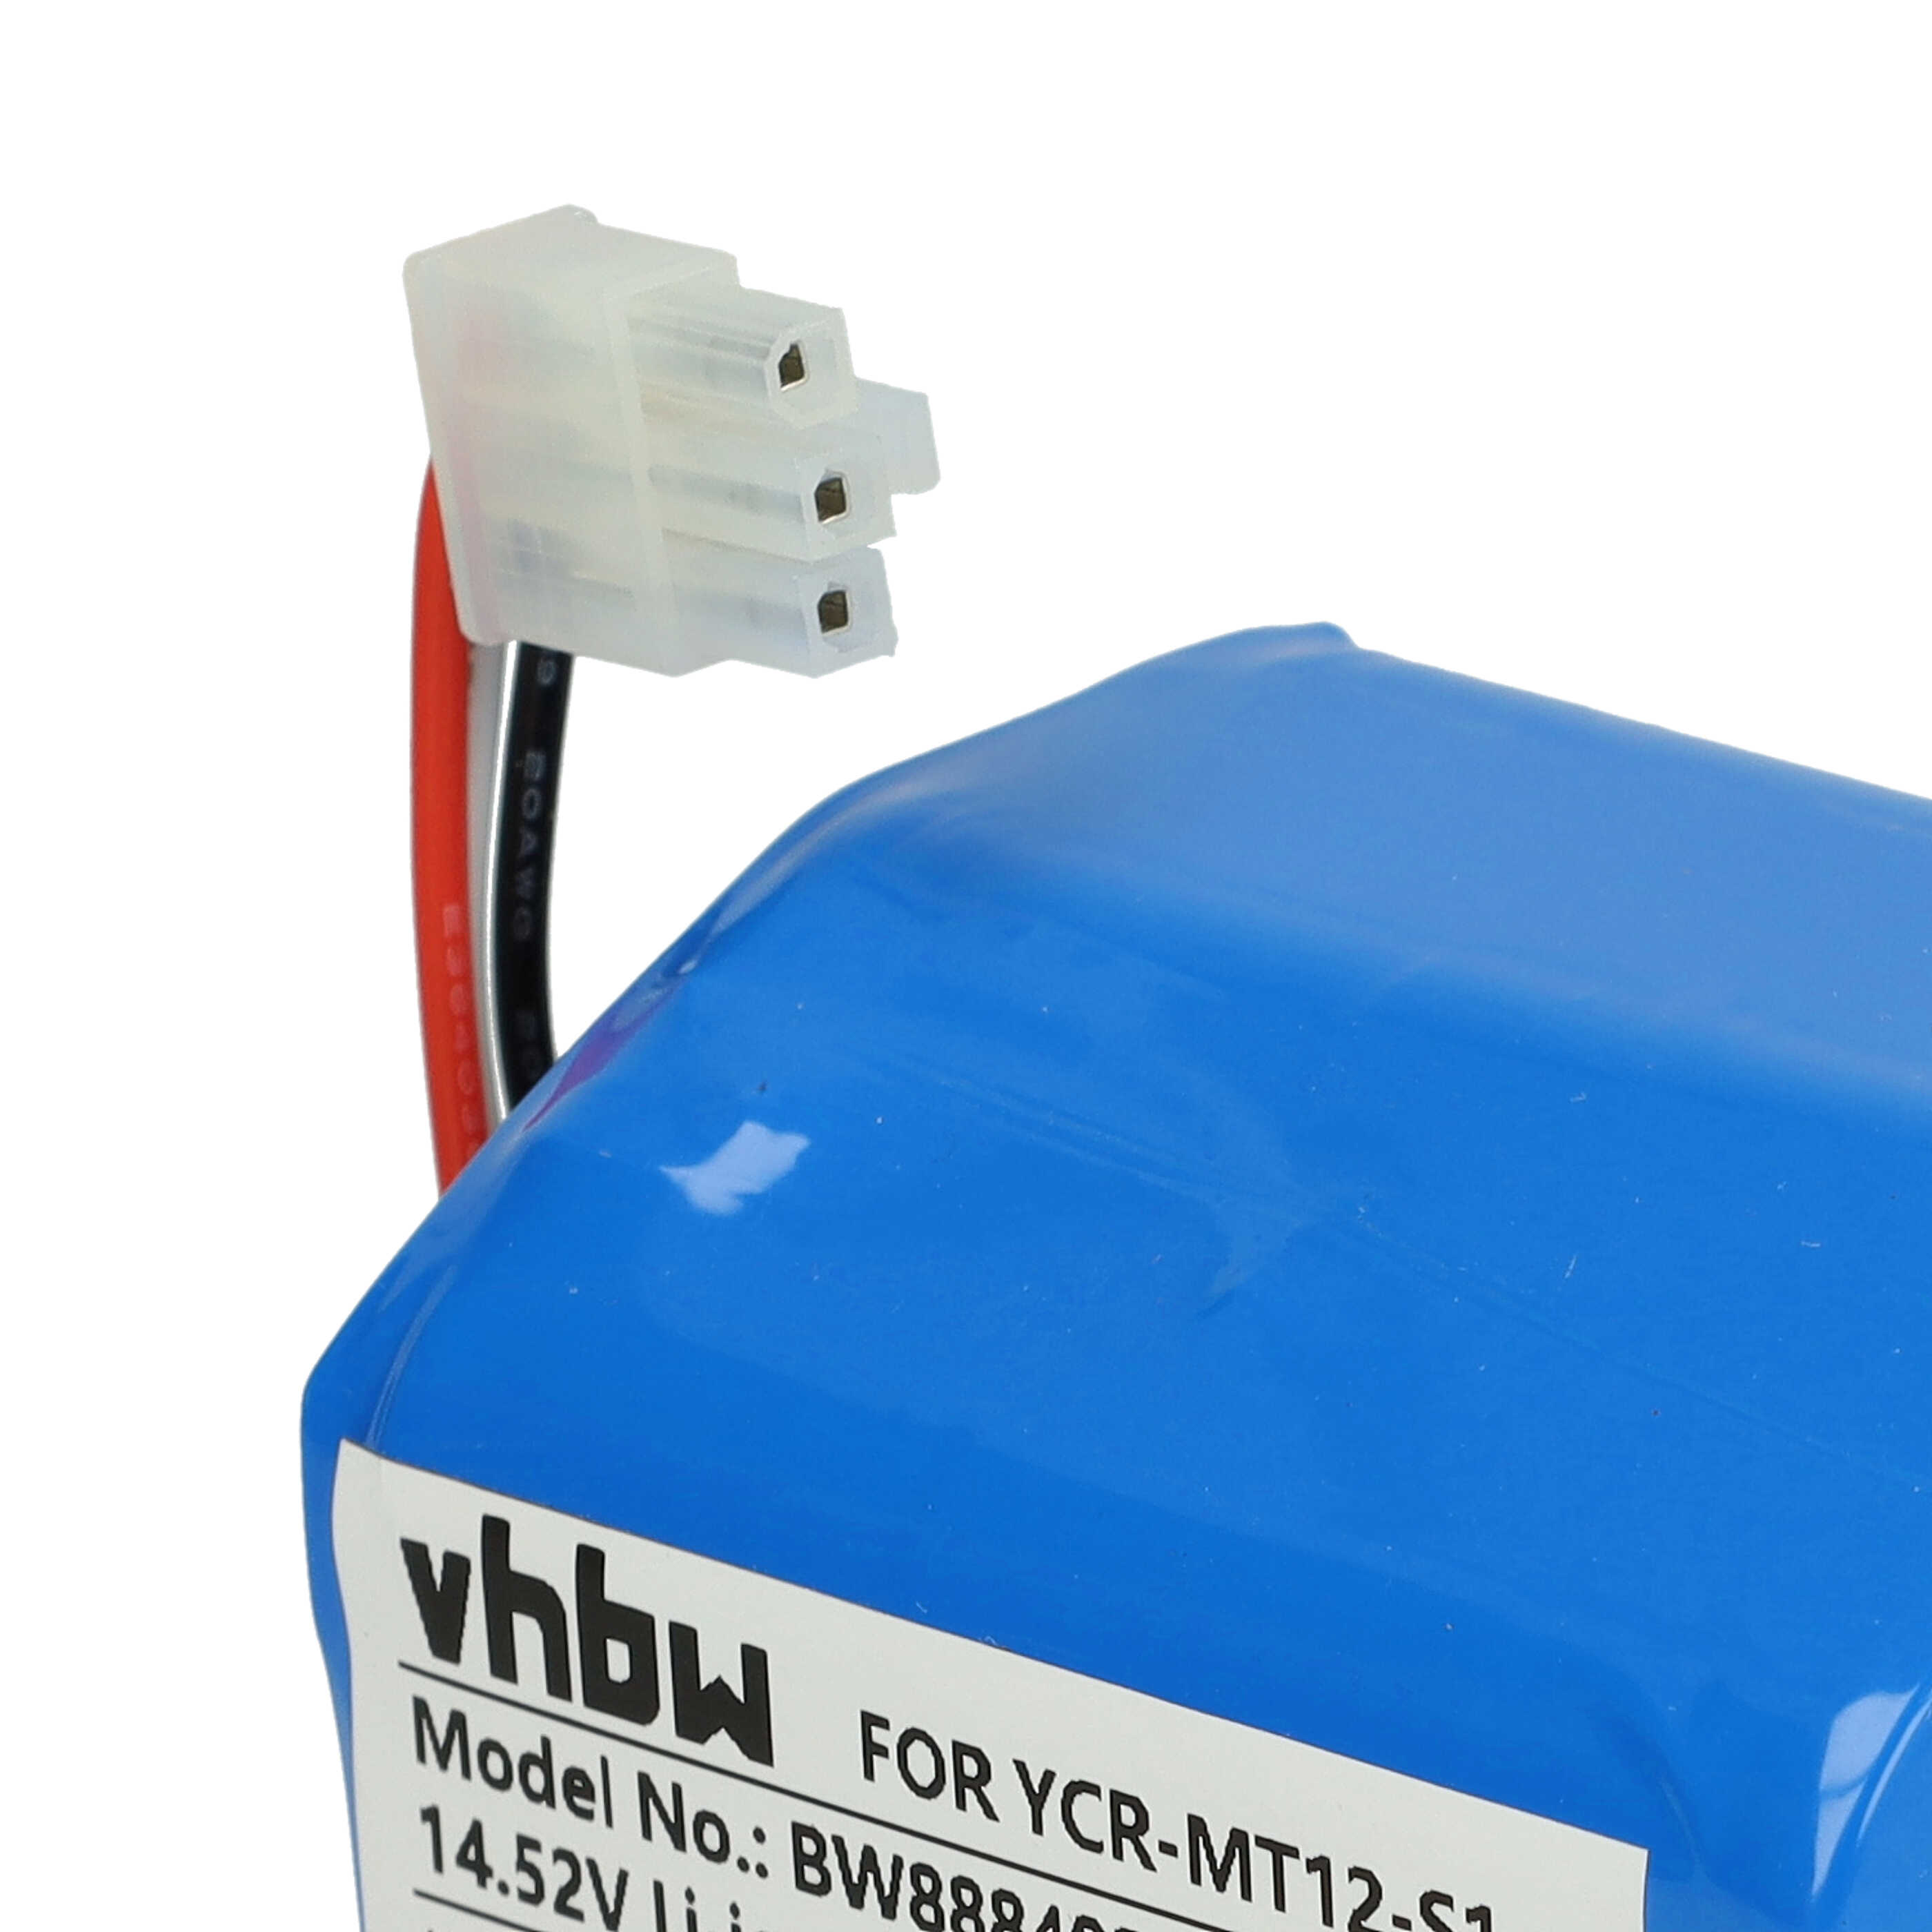 Batterie remplace iClebo YCR-M07-20W, YCR-MT12-S1 pour robot aspirateur - 6000mAh 14,52V Li-ion